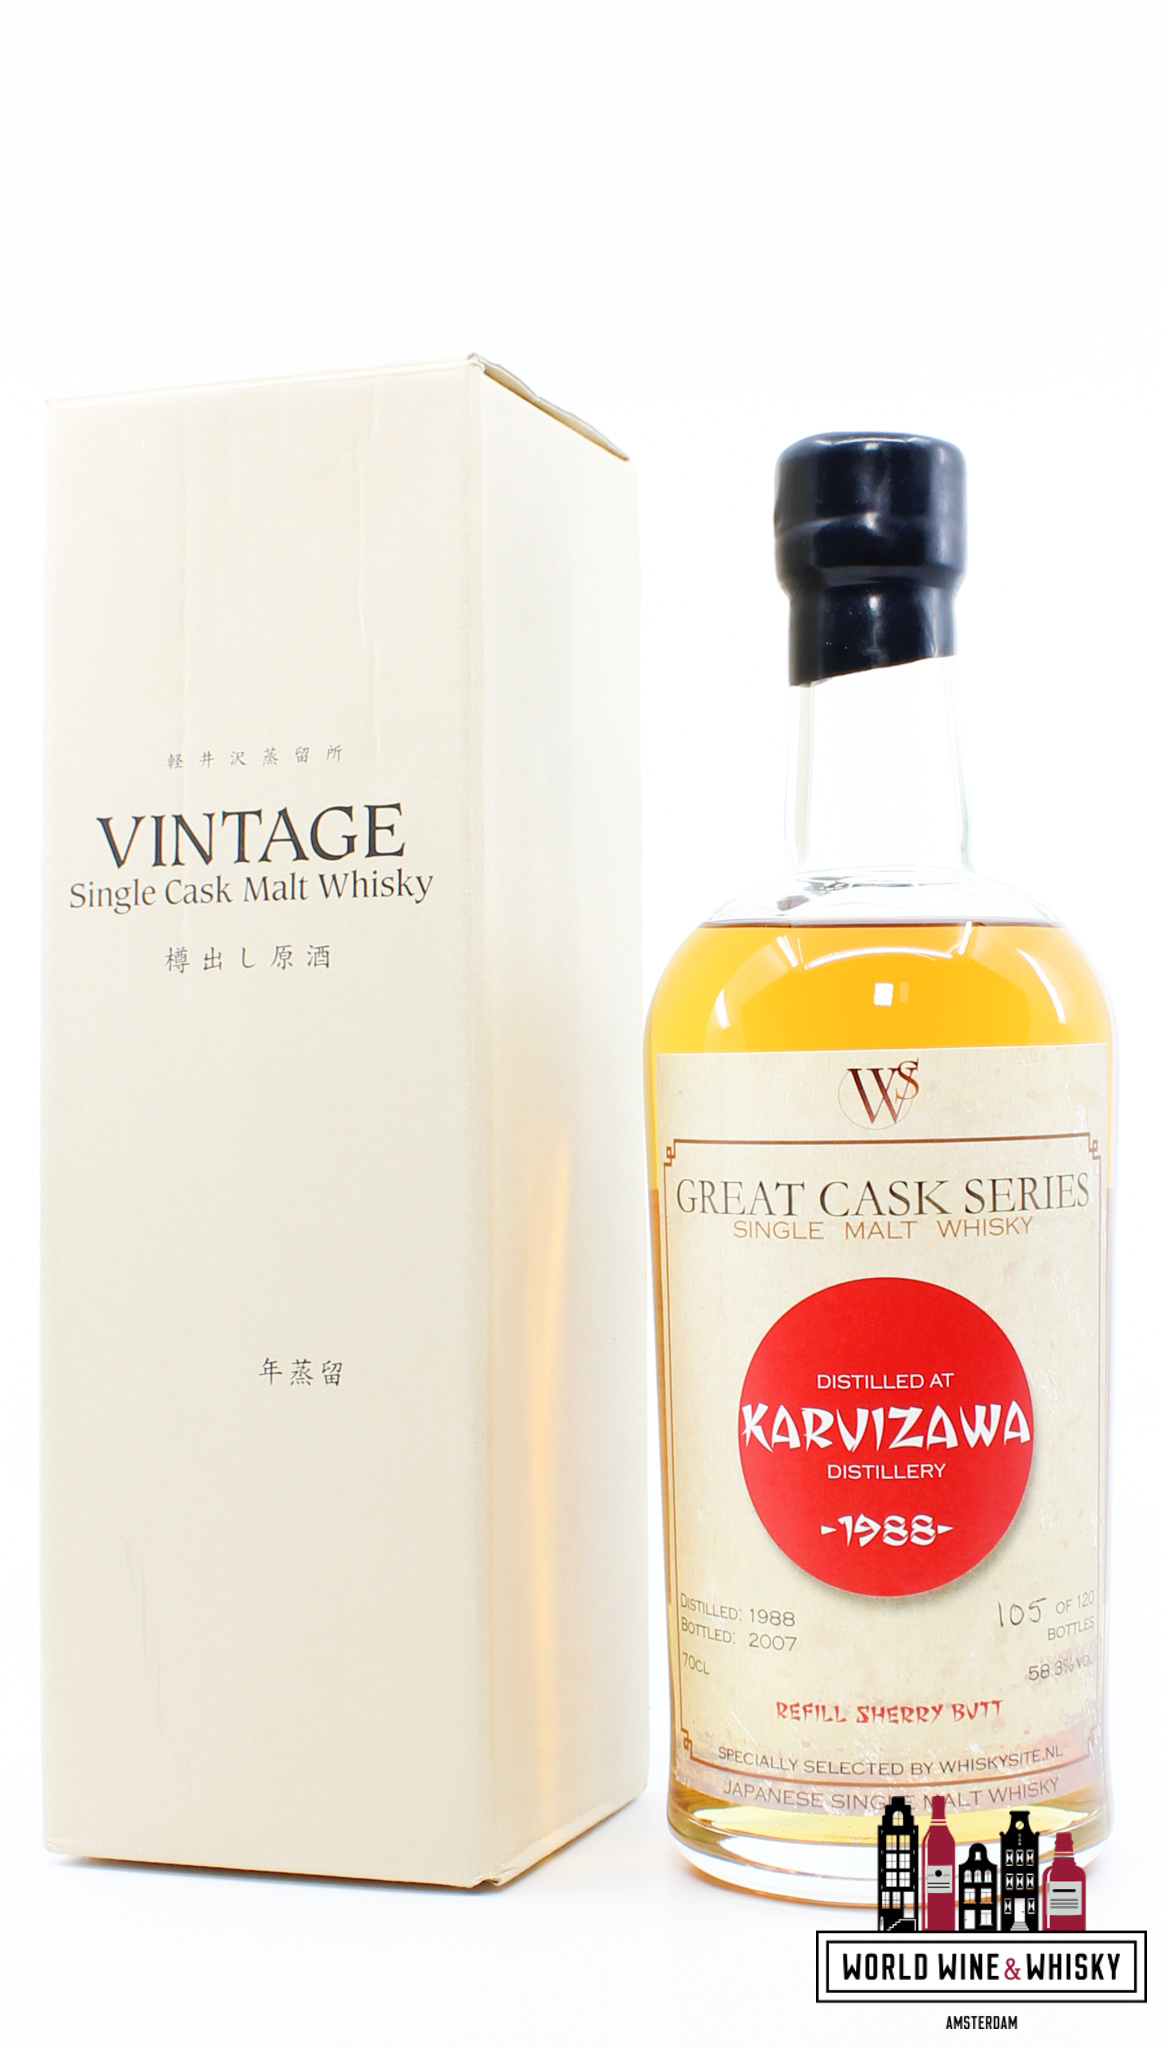 Karuizawa Karuizawa 1988 2007 - Great Cask Series - Whiskysite.nl 58.3% (1 of 120)